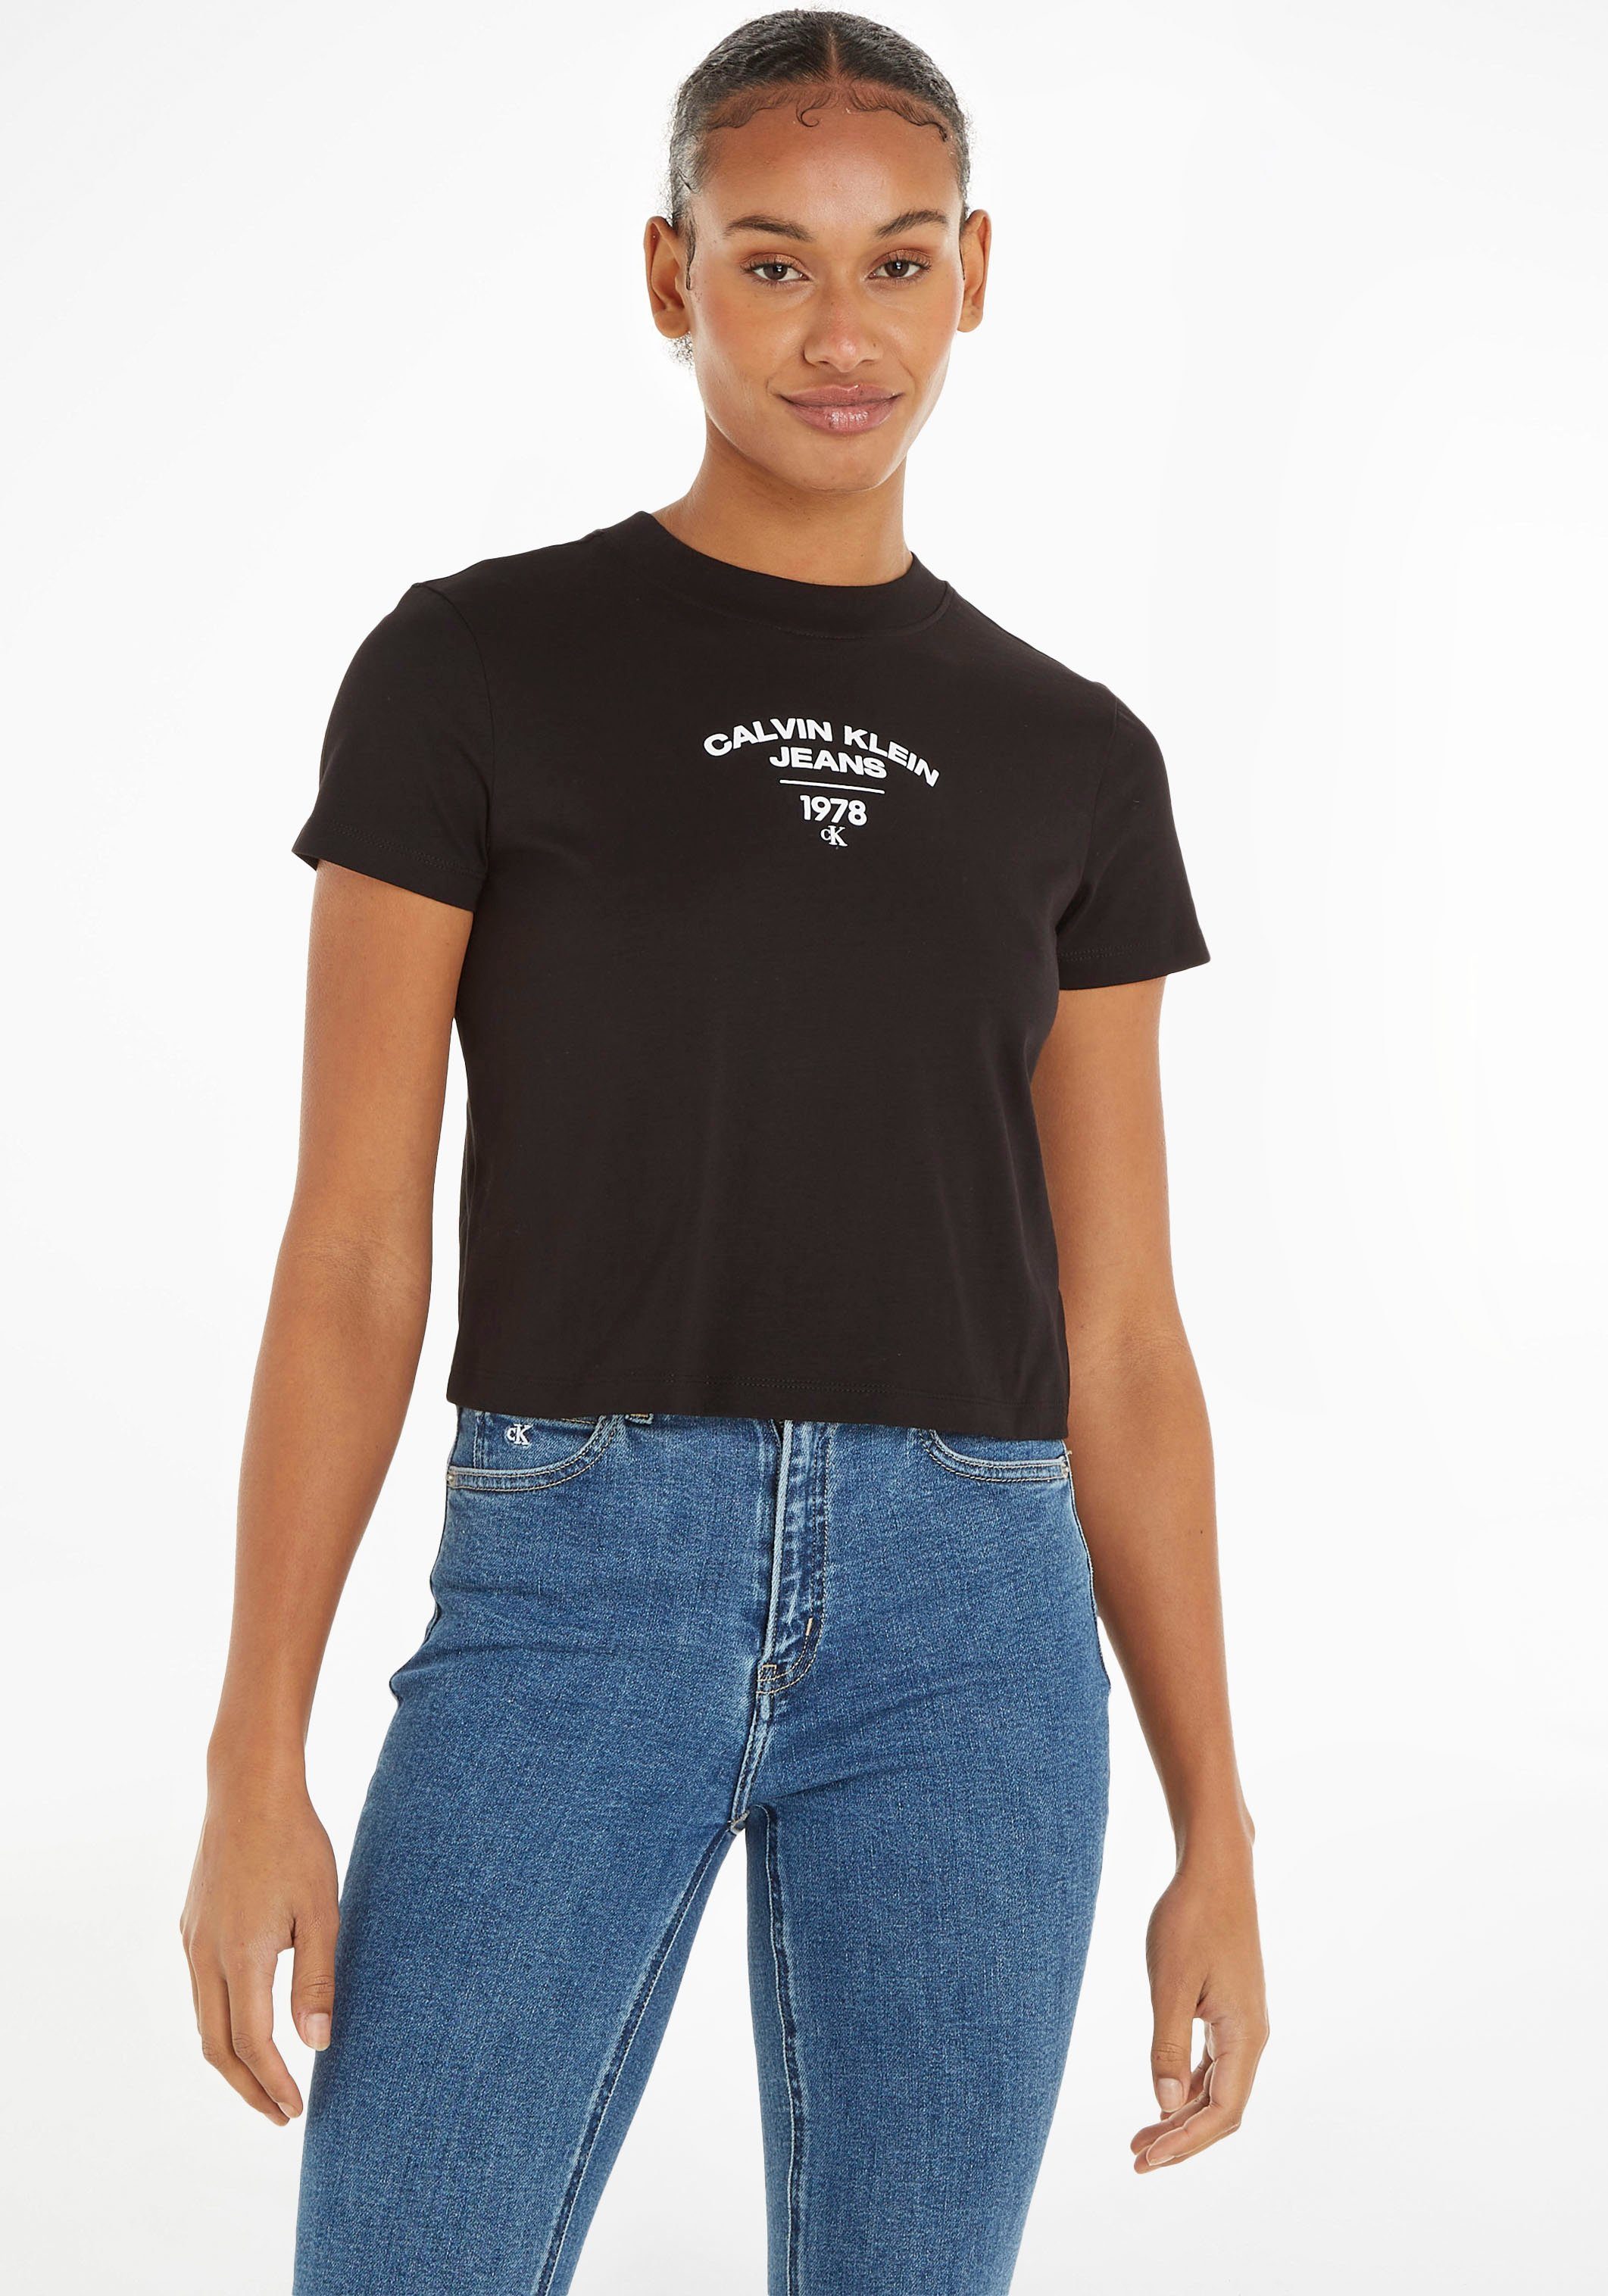 Calvin Klein Jeans T-Shirt VARSITY Black TEE LOGO BABY Ck